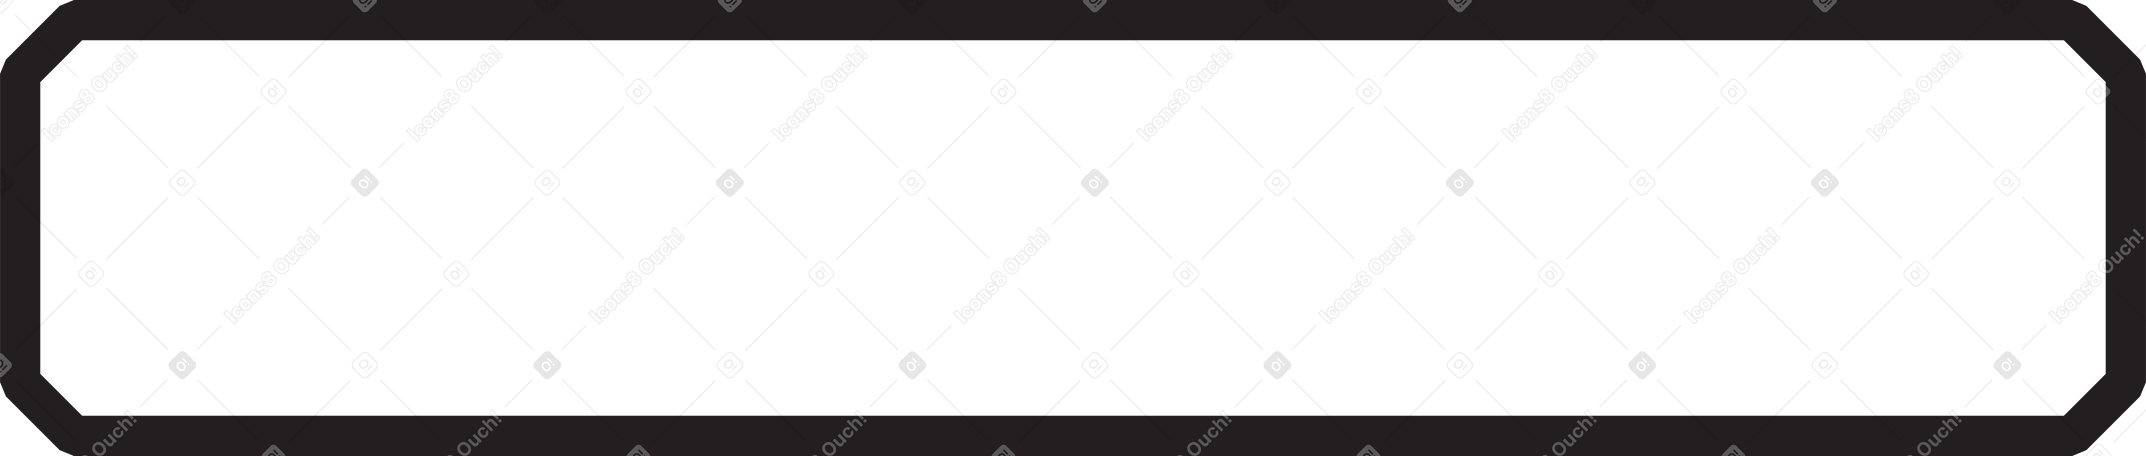 rectangular laptop for interface Illustration in PNG, SVG